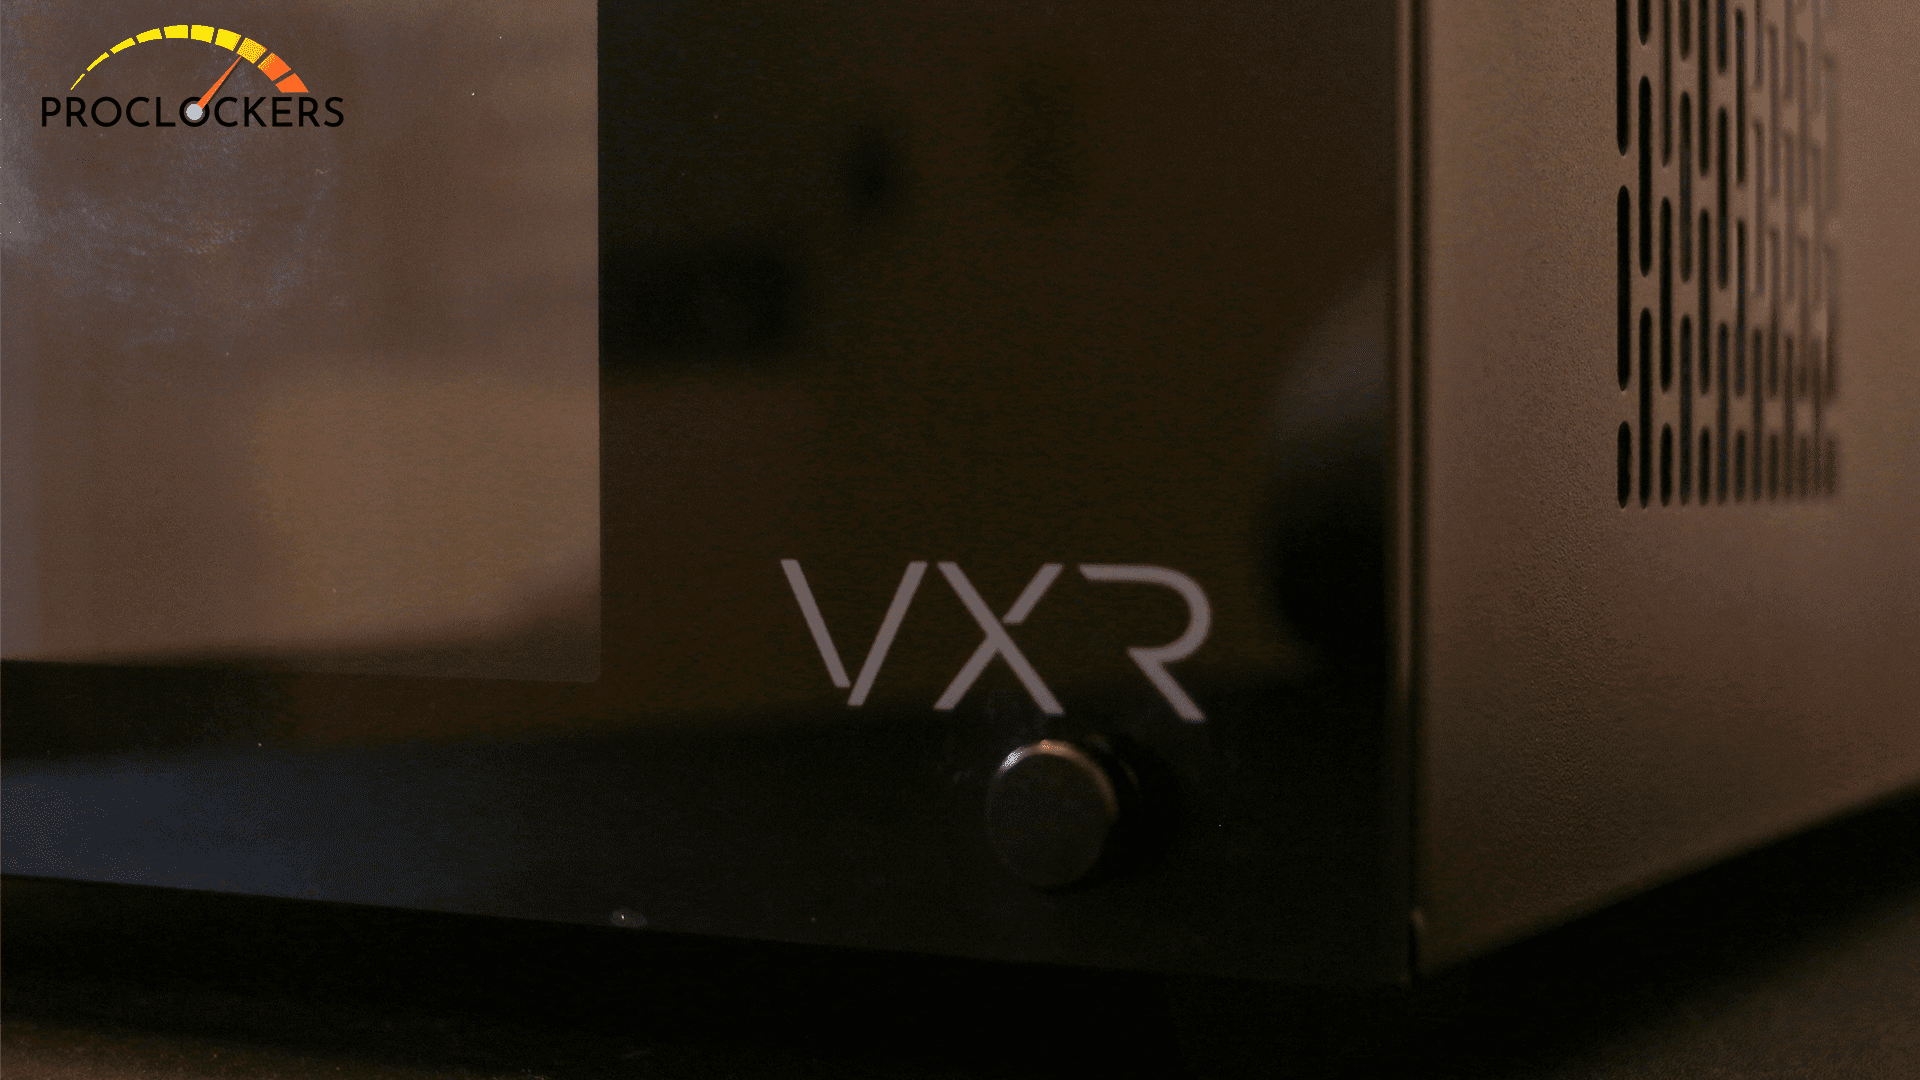 VXR UNPACKED SHOWING VXR LOGO ON FRONT OF CASE